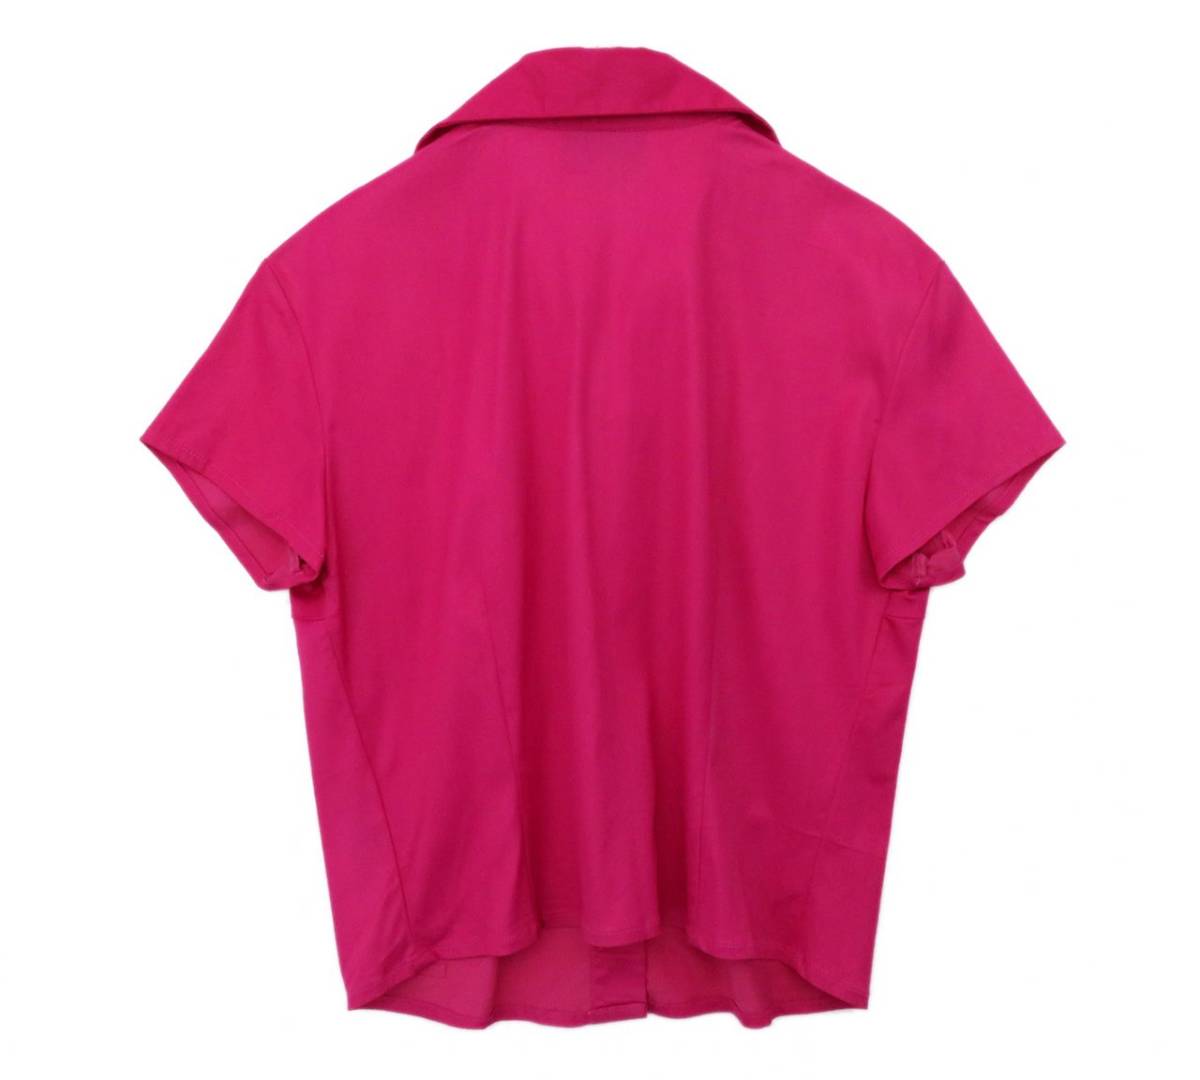 3589 beautiful goods FENDI Fendi stretch short sleeves shirt blouse Italy made 42 pink rare color Vintage kala Full color 